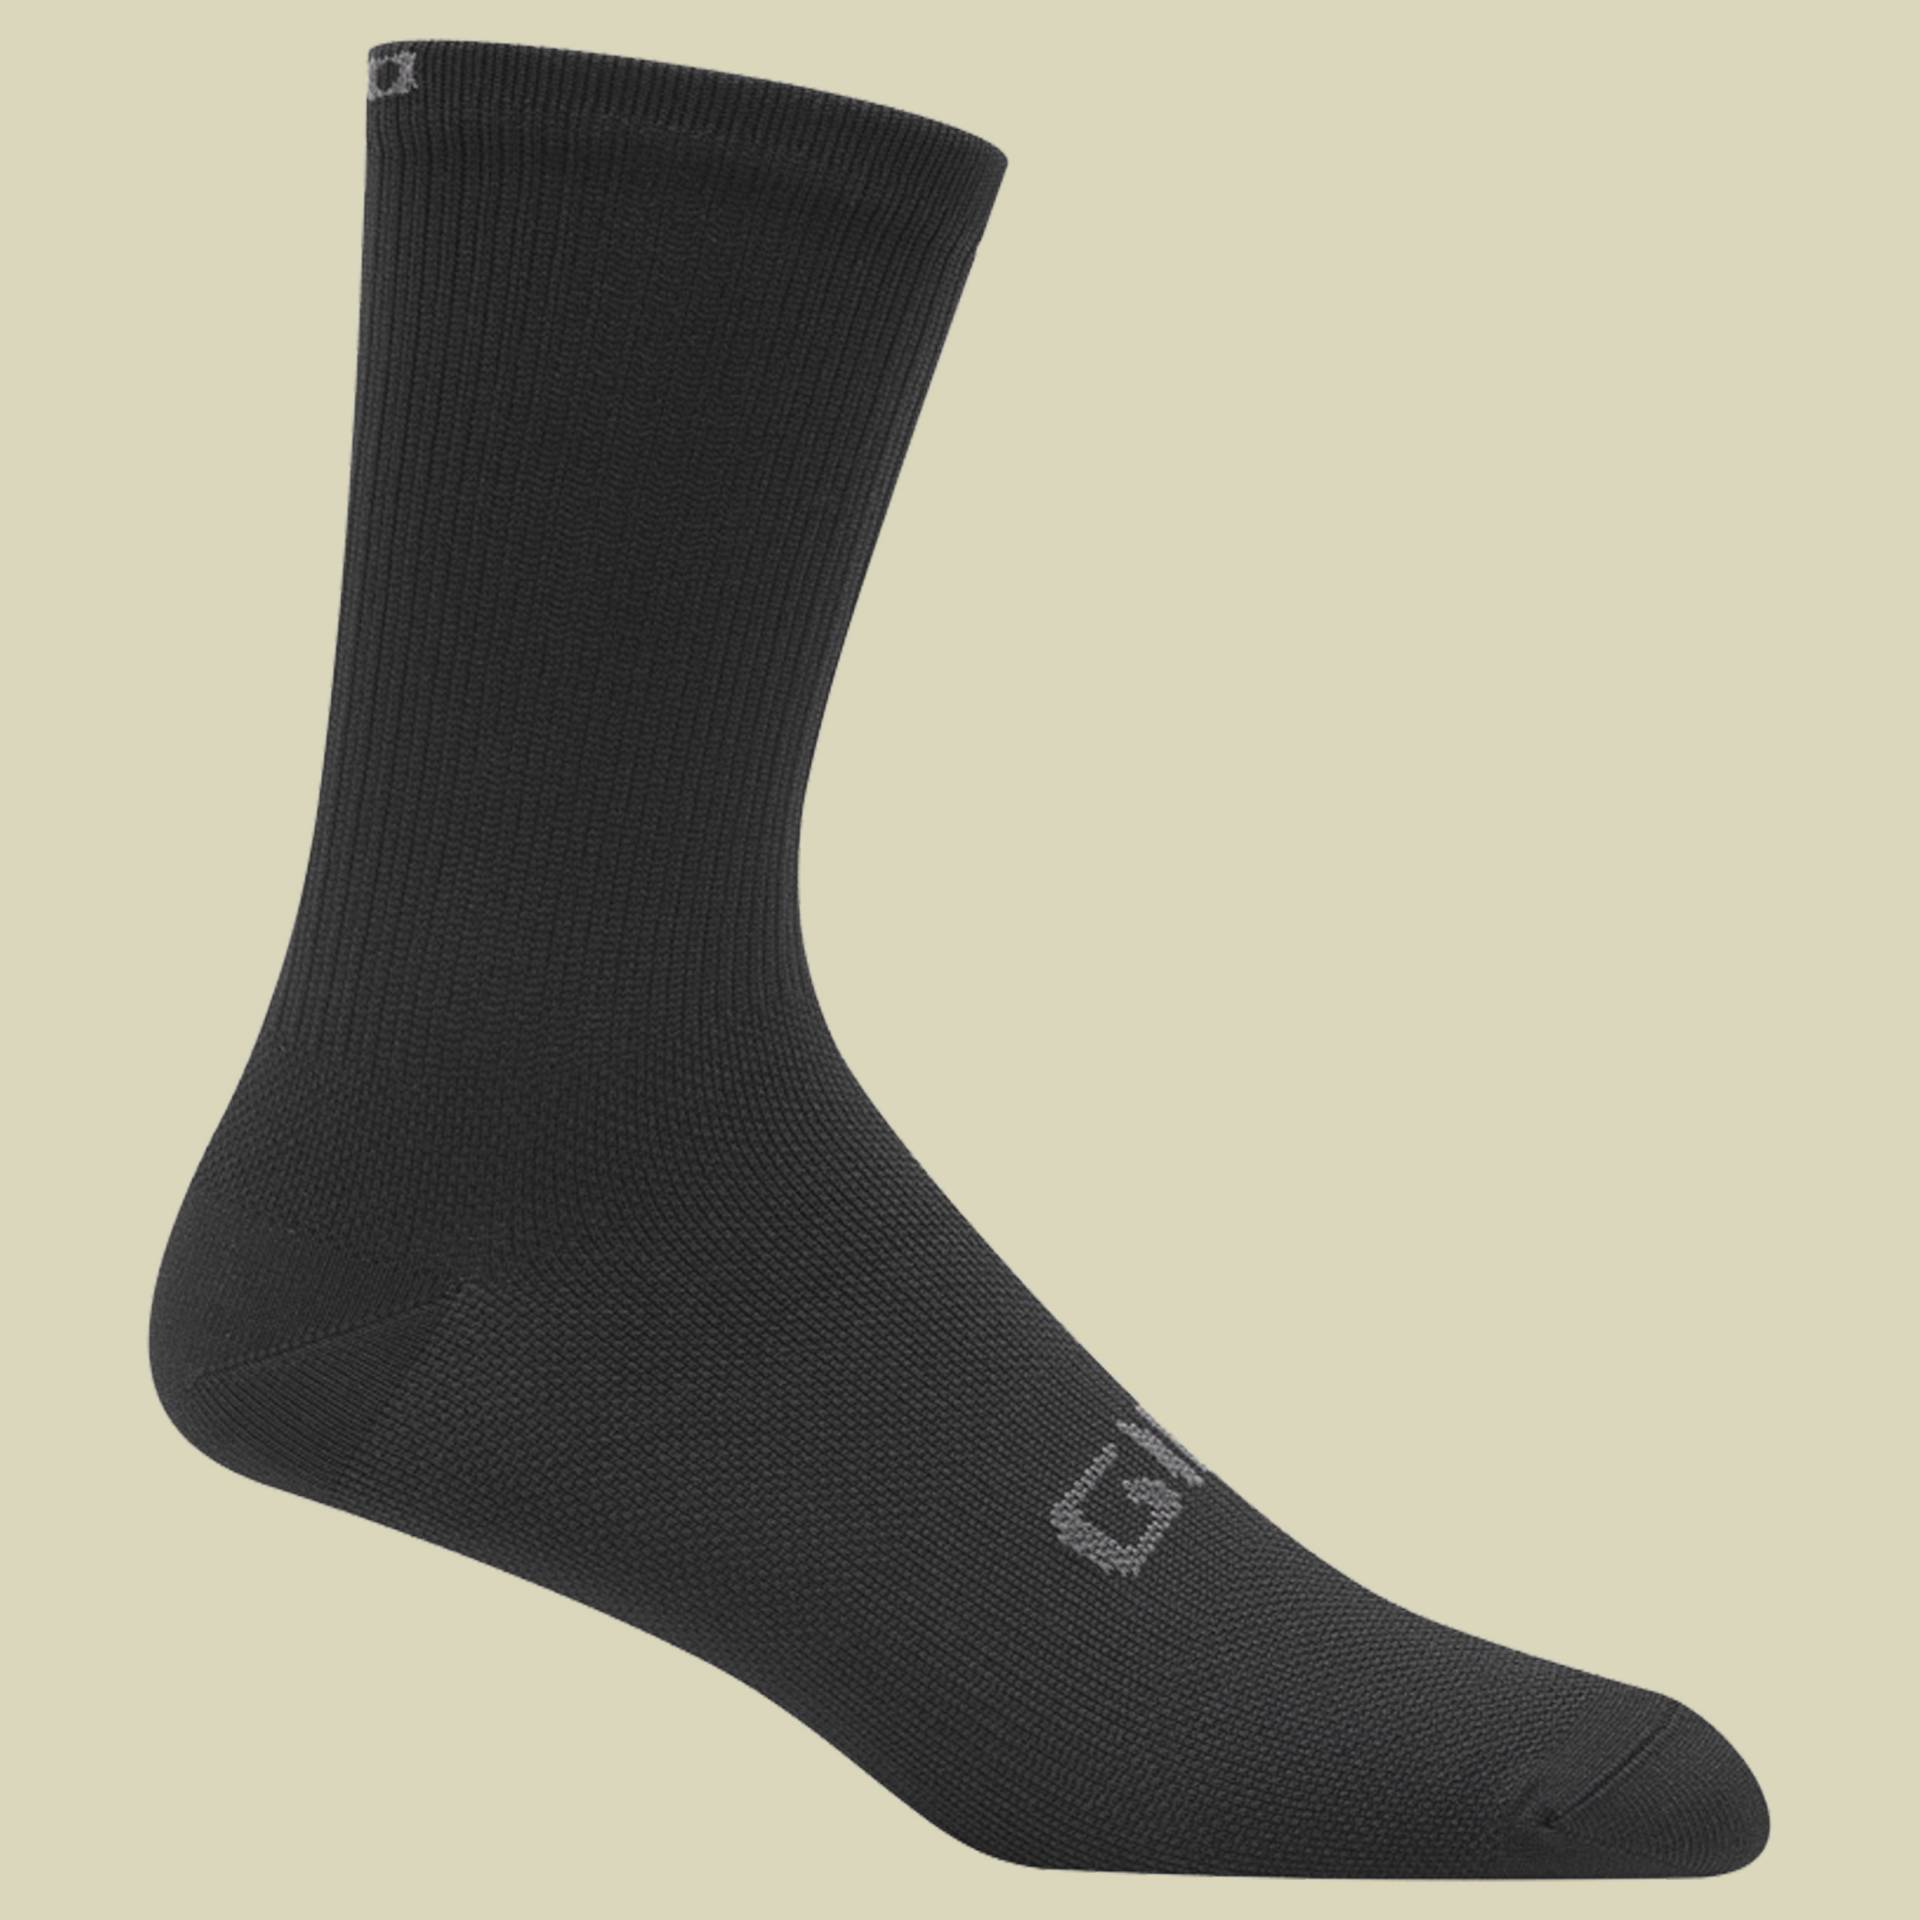 Xnetic H2O Sock Größe 46-48 Farbe black von Giro